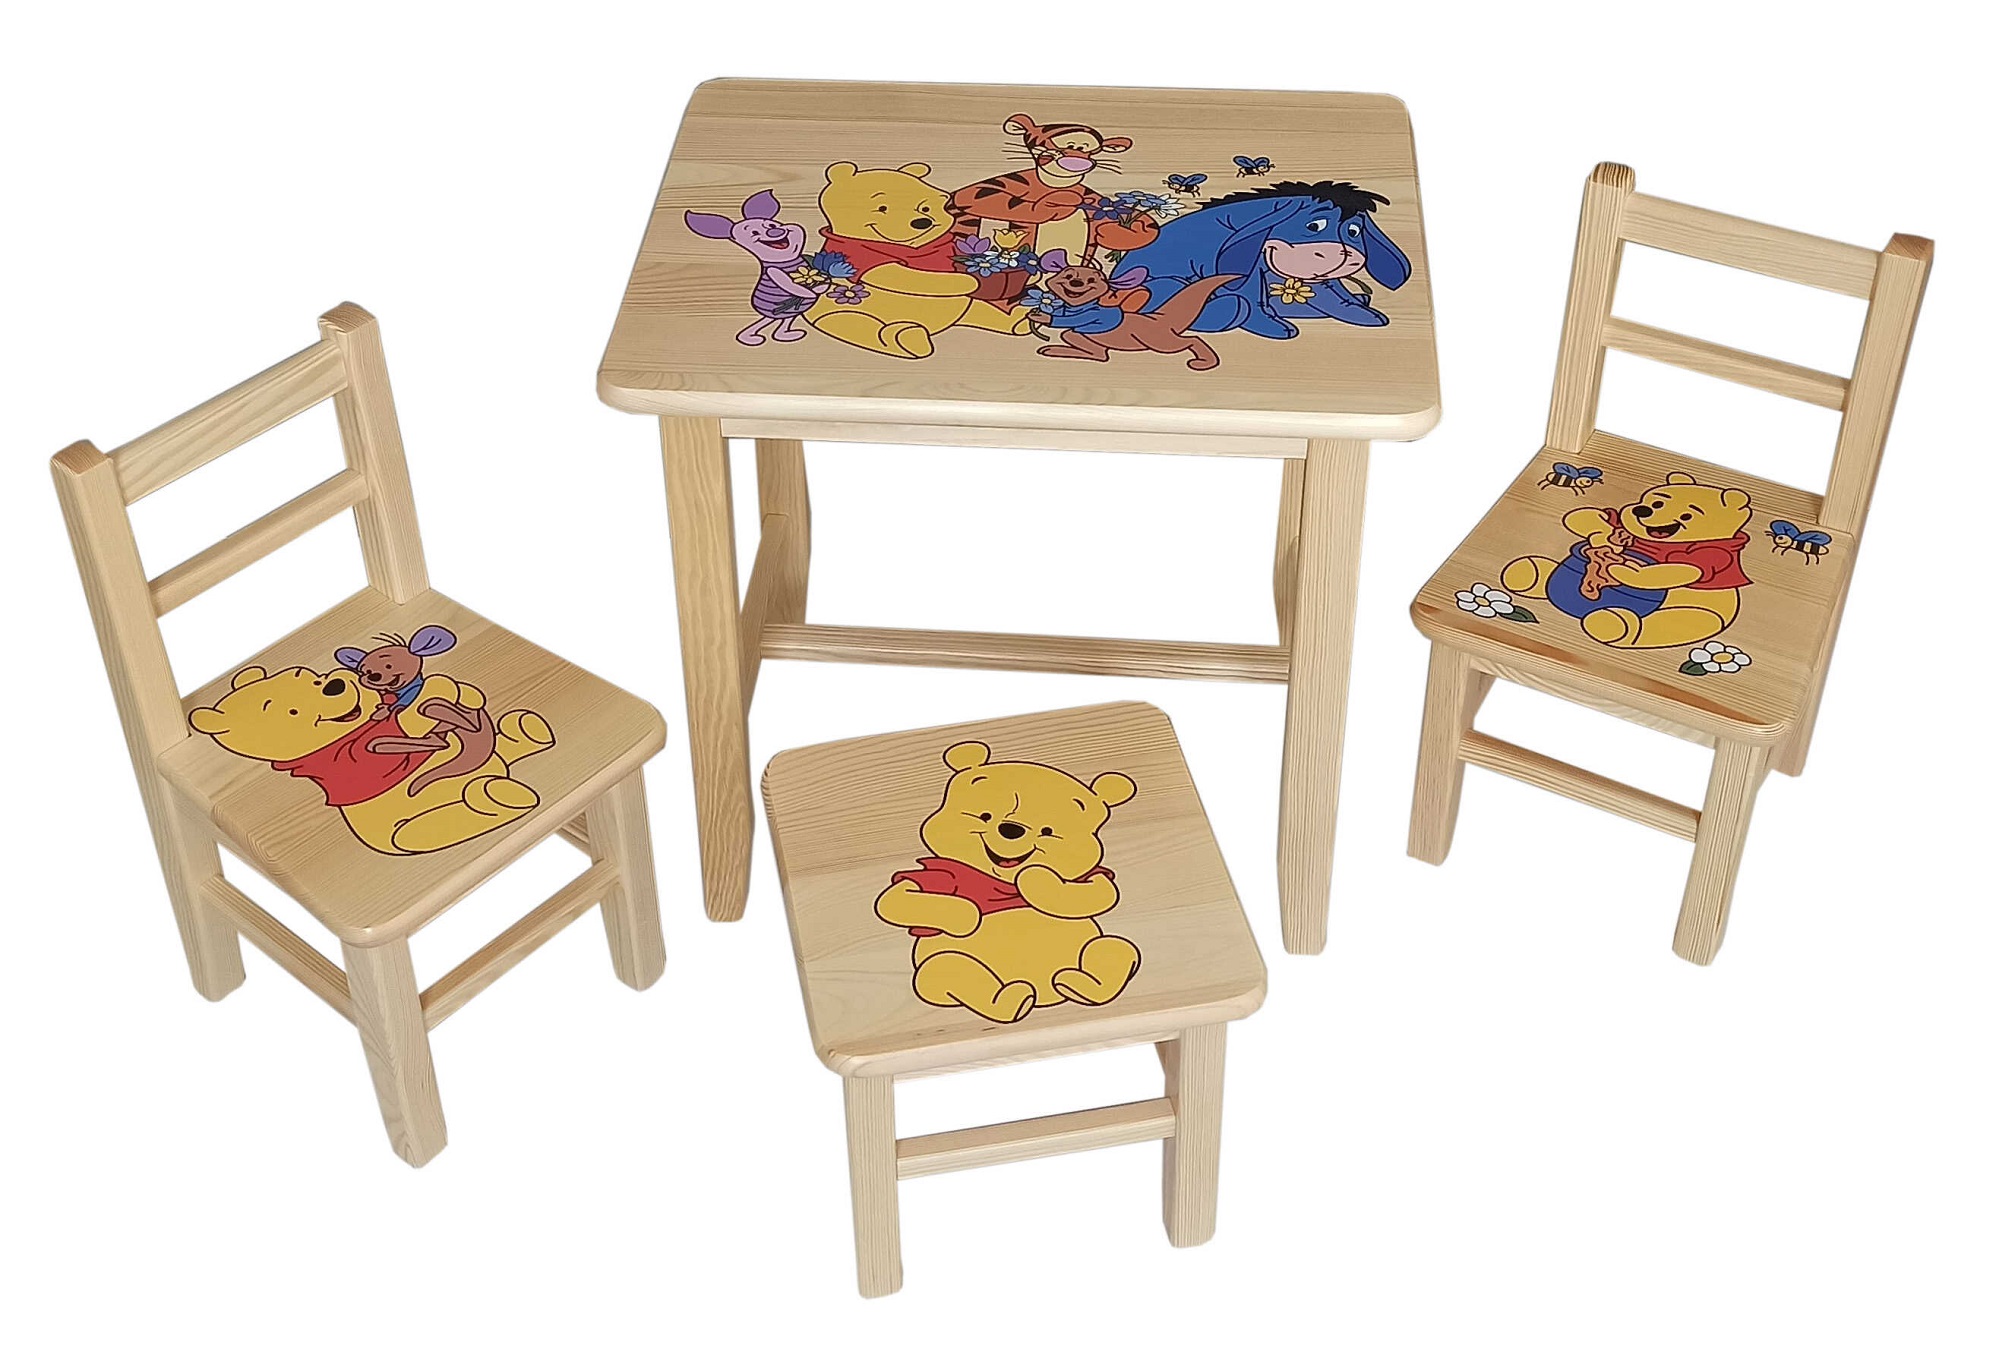 Detský Stôl s stoličkami macko pu + malý stolček zadarmo !!